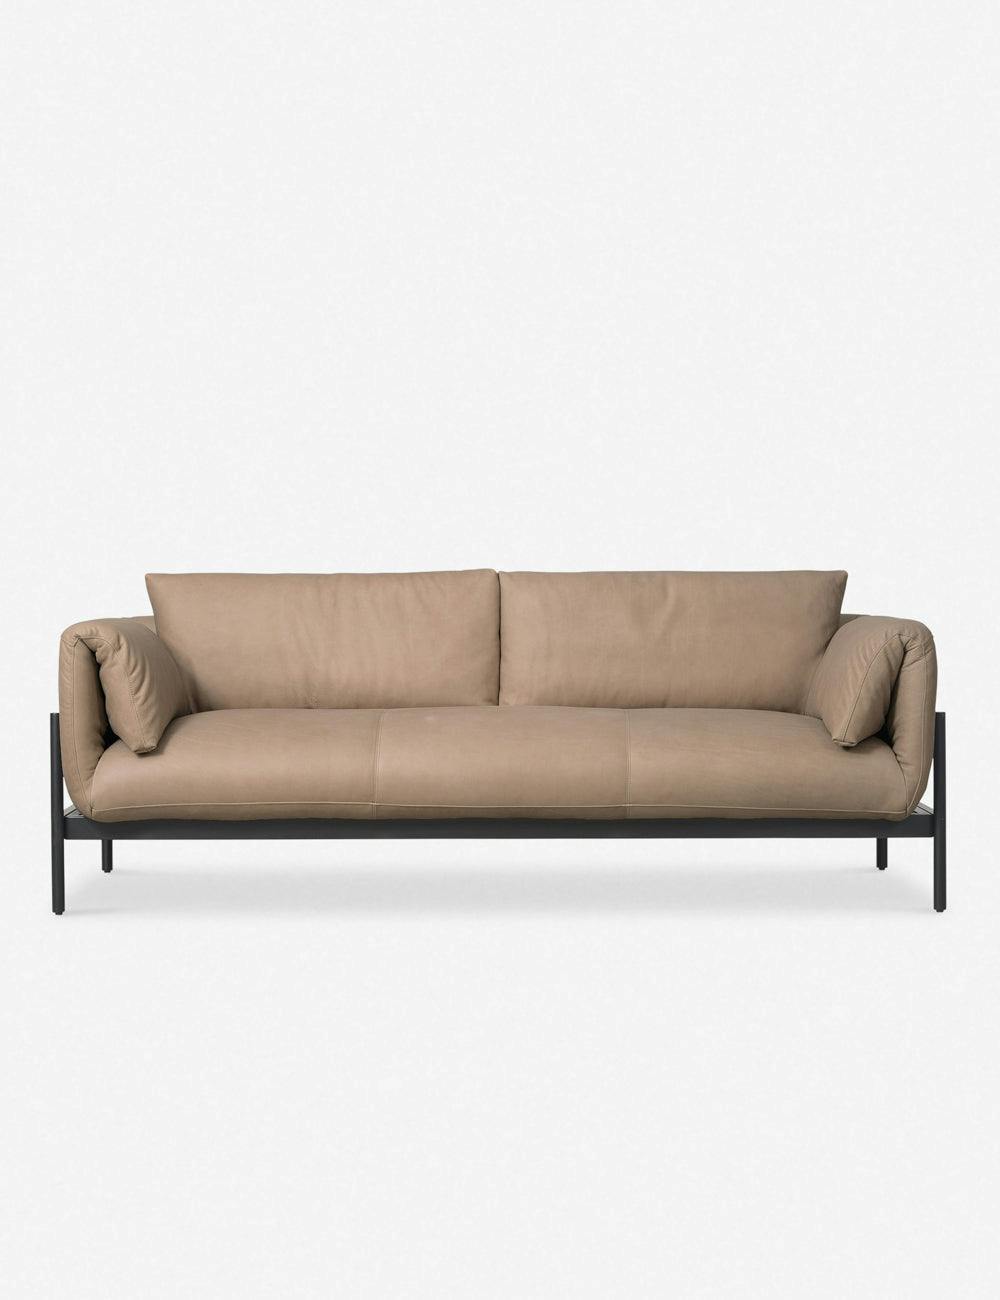 Frampton Taupe Leather Sofa